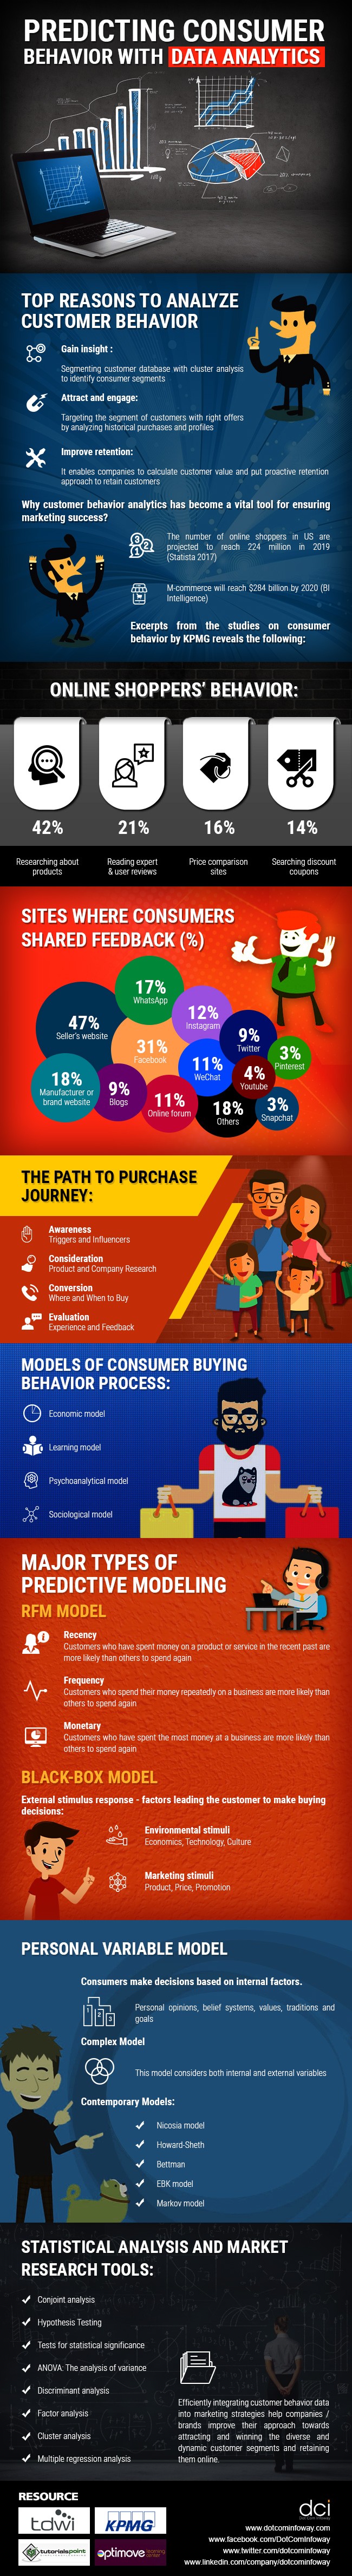 Predicting-consumer-behavior-with-data-analytics